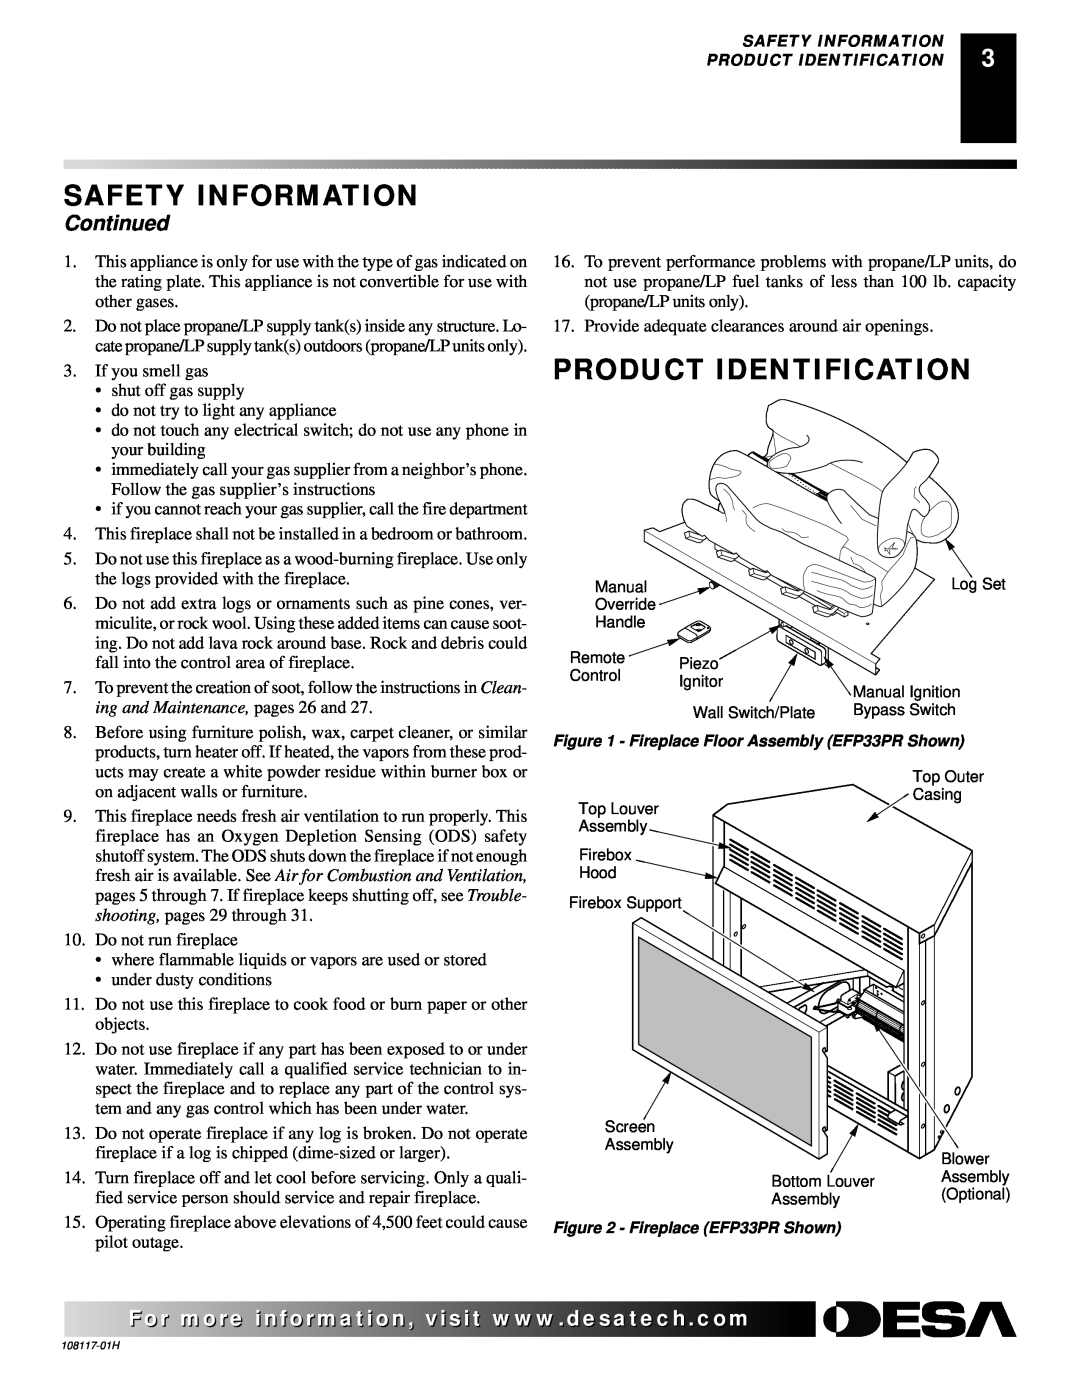 Desa EFP33PR, EFP33NR installation manual Product Identification, Continued, Safety Information 